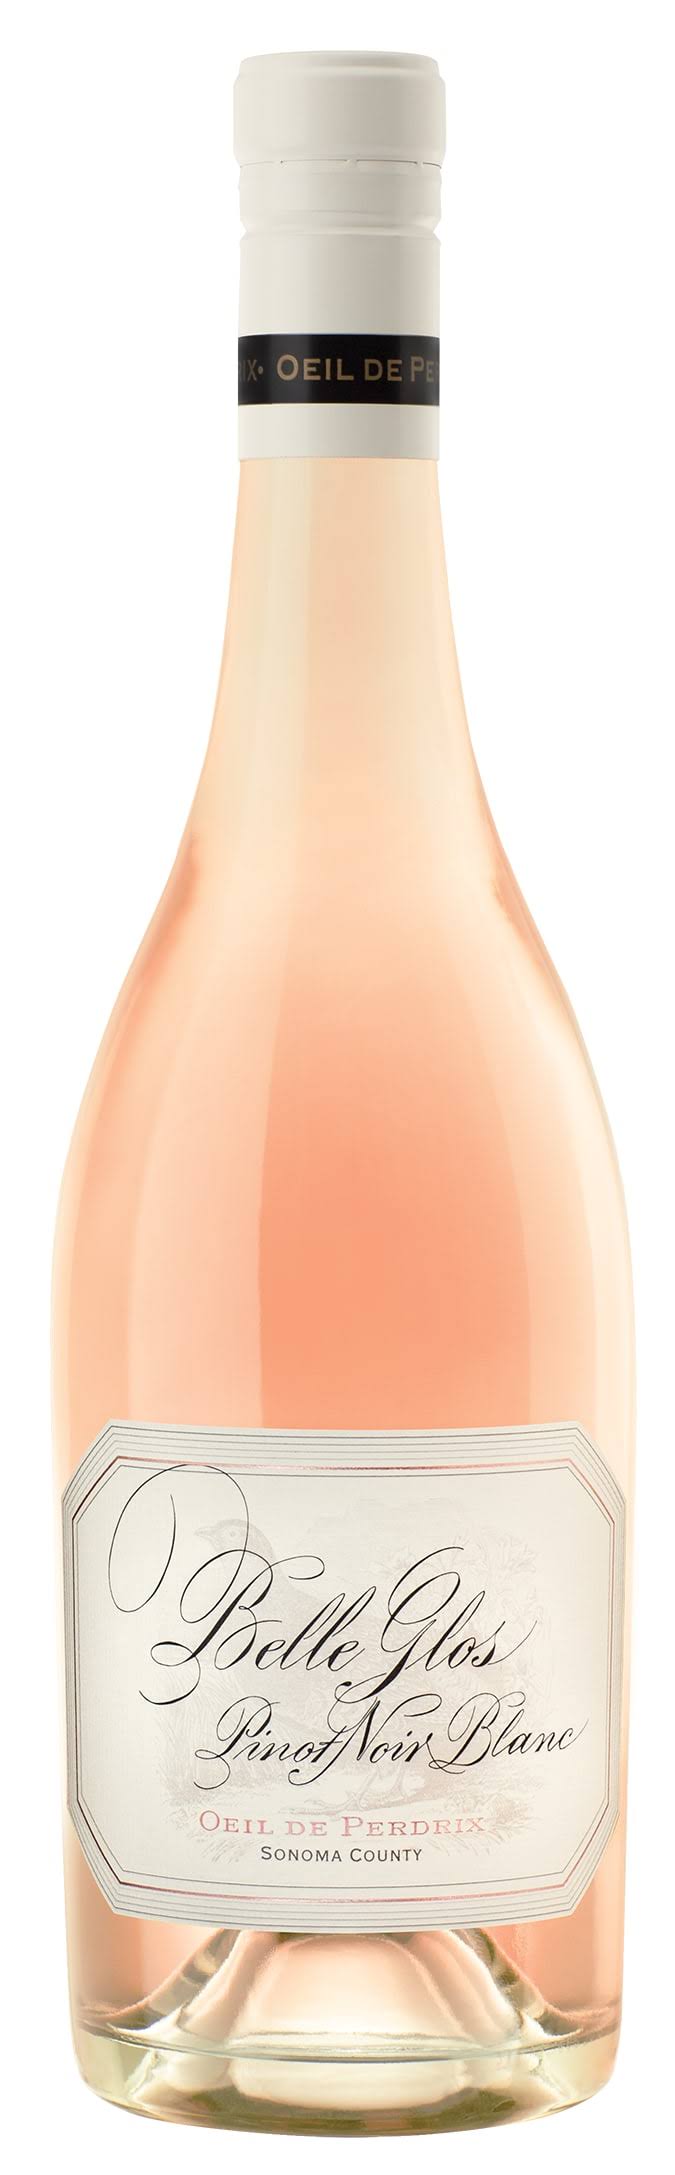 Belle Glos Pinot Noir, Sonoma County - 750 ml